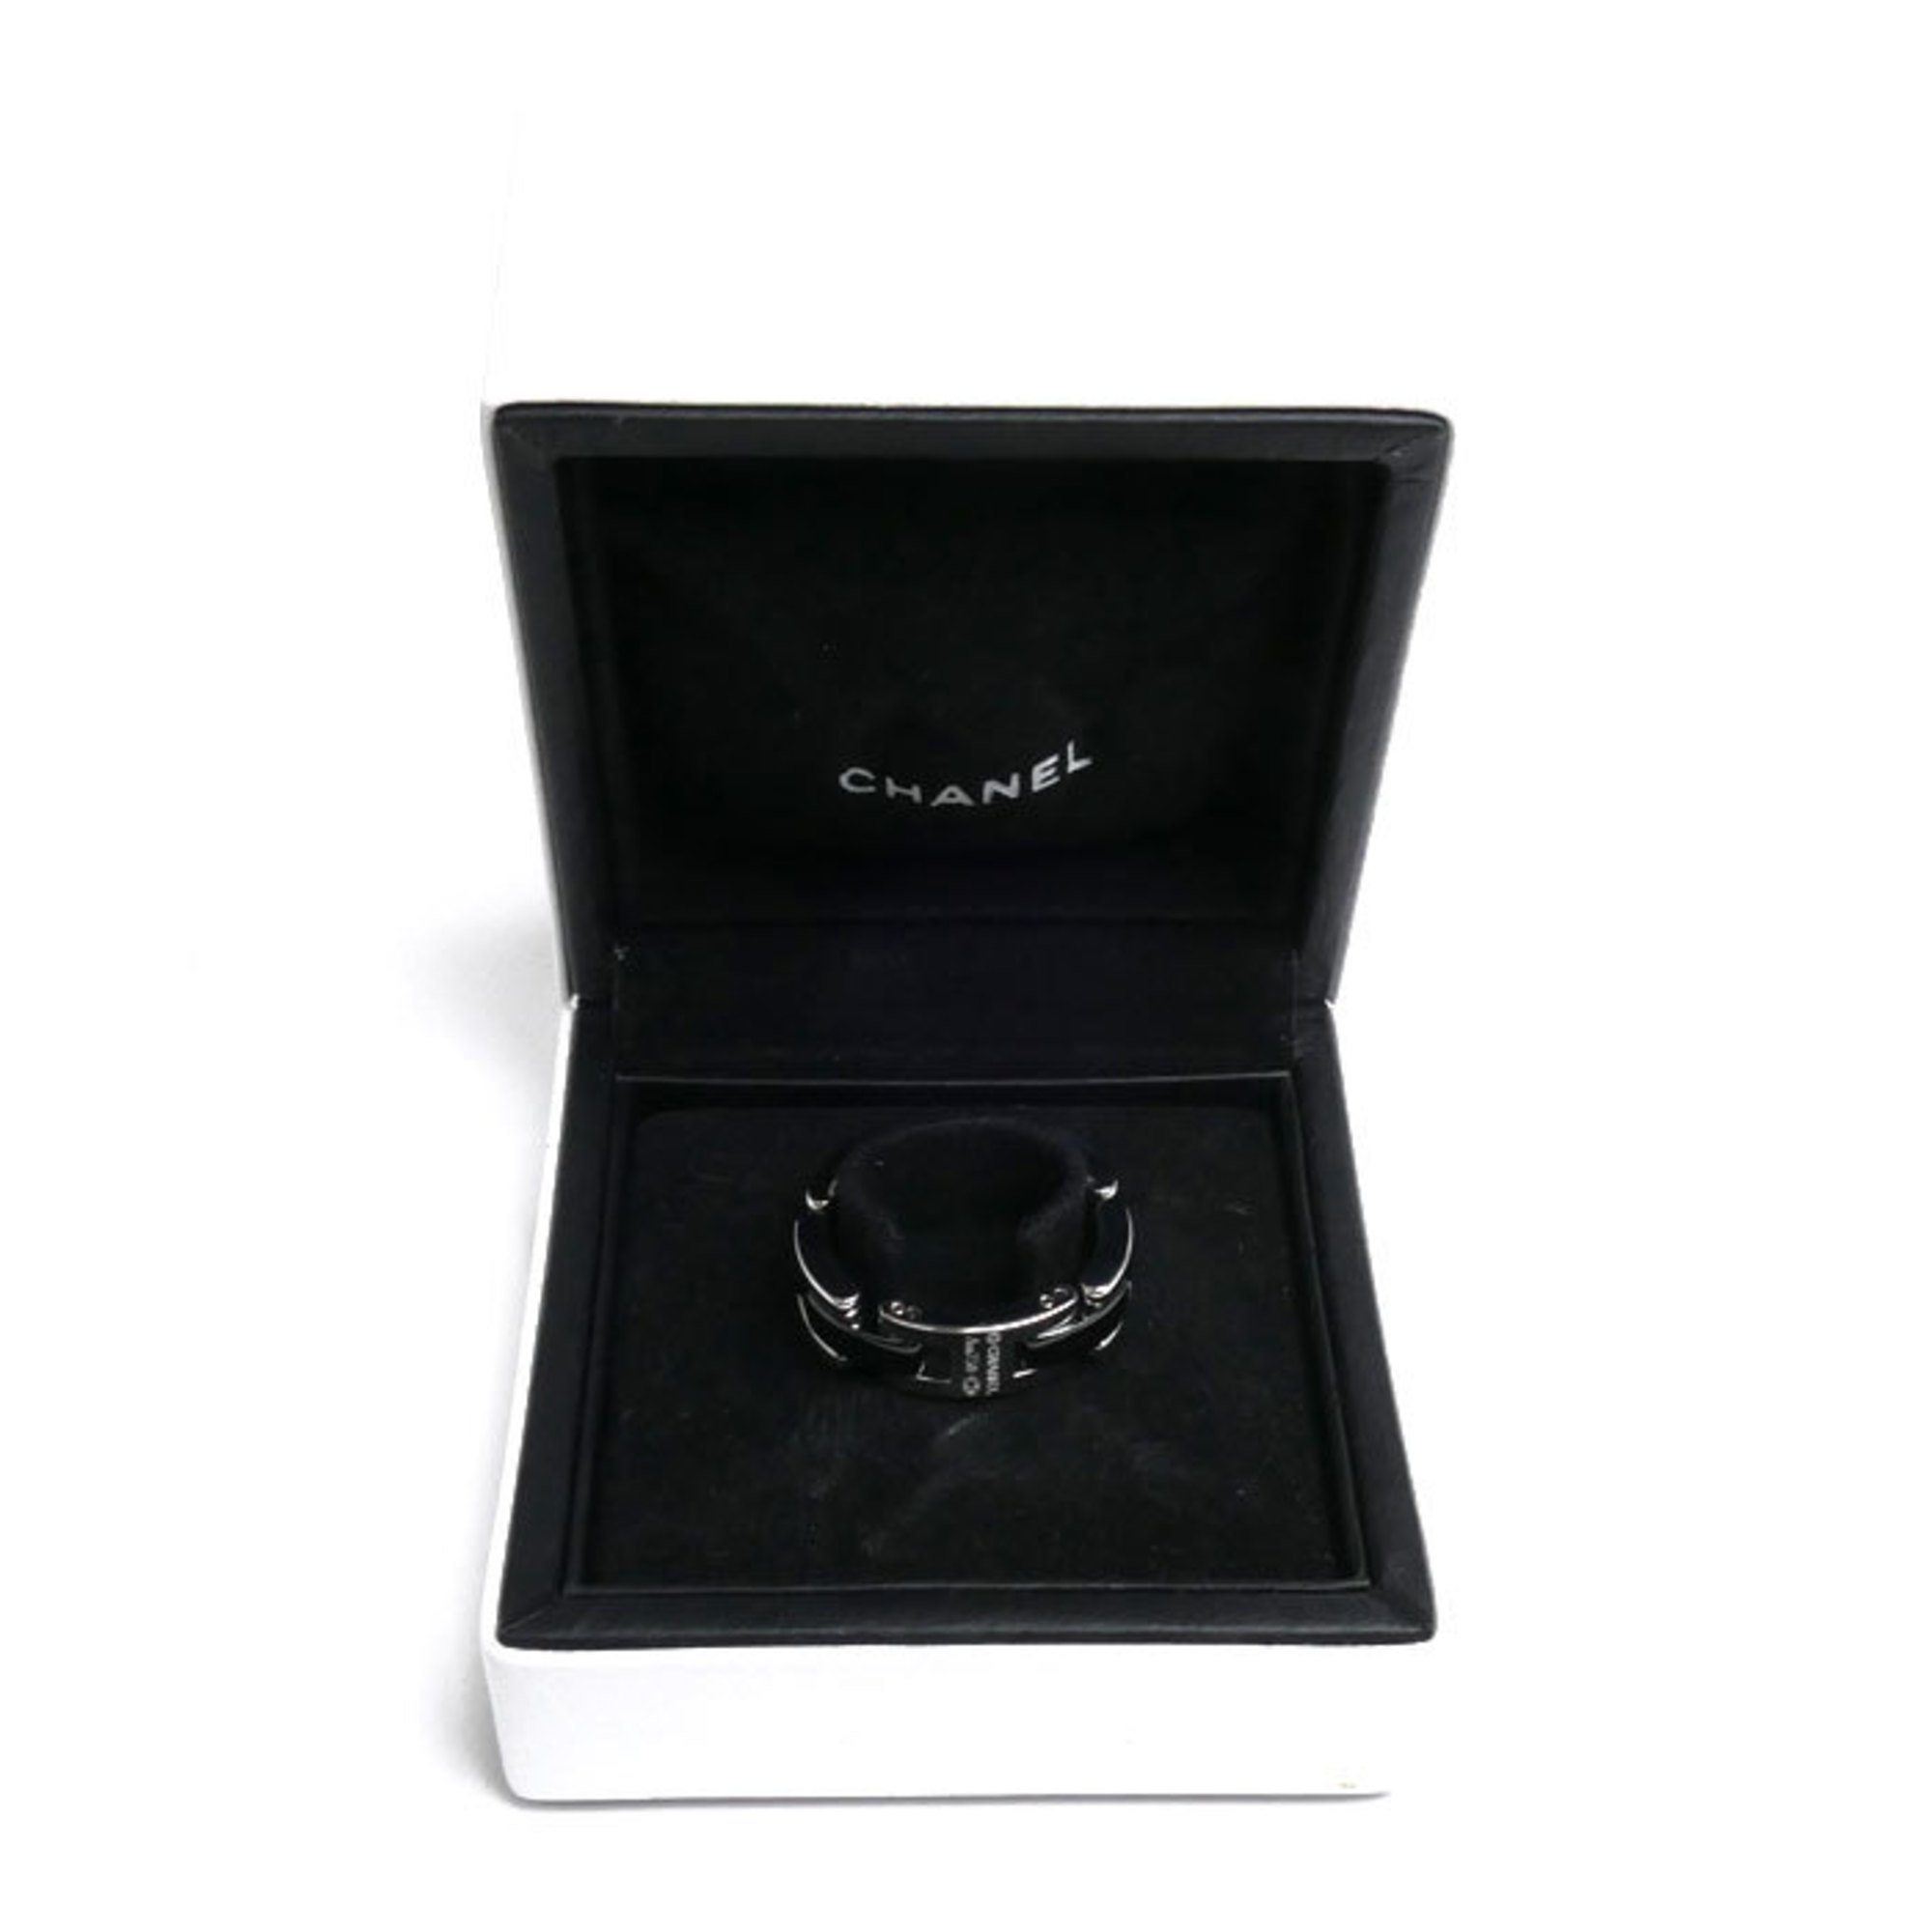 CHANEL K18WG White Gold Ceramic Ultra Collection Medium Ring J2636 Size 18 58 10.7g Unisex